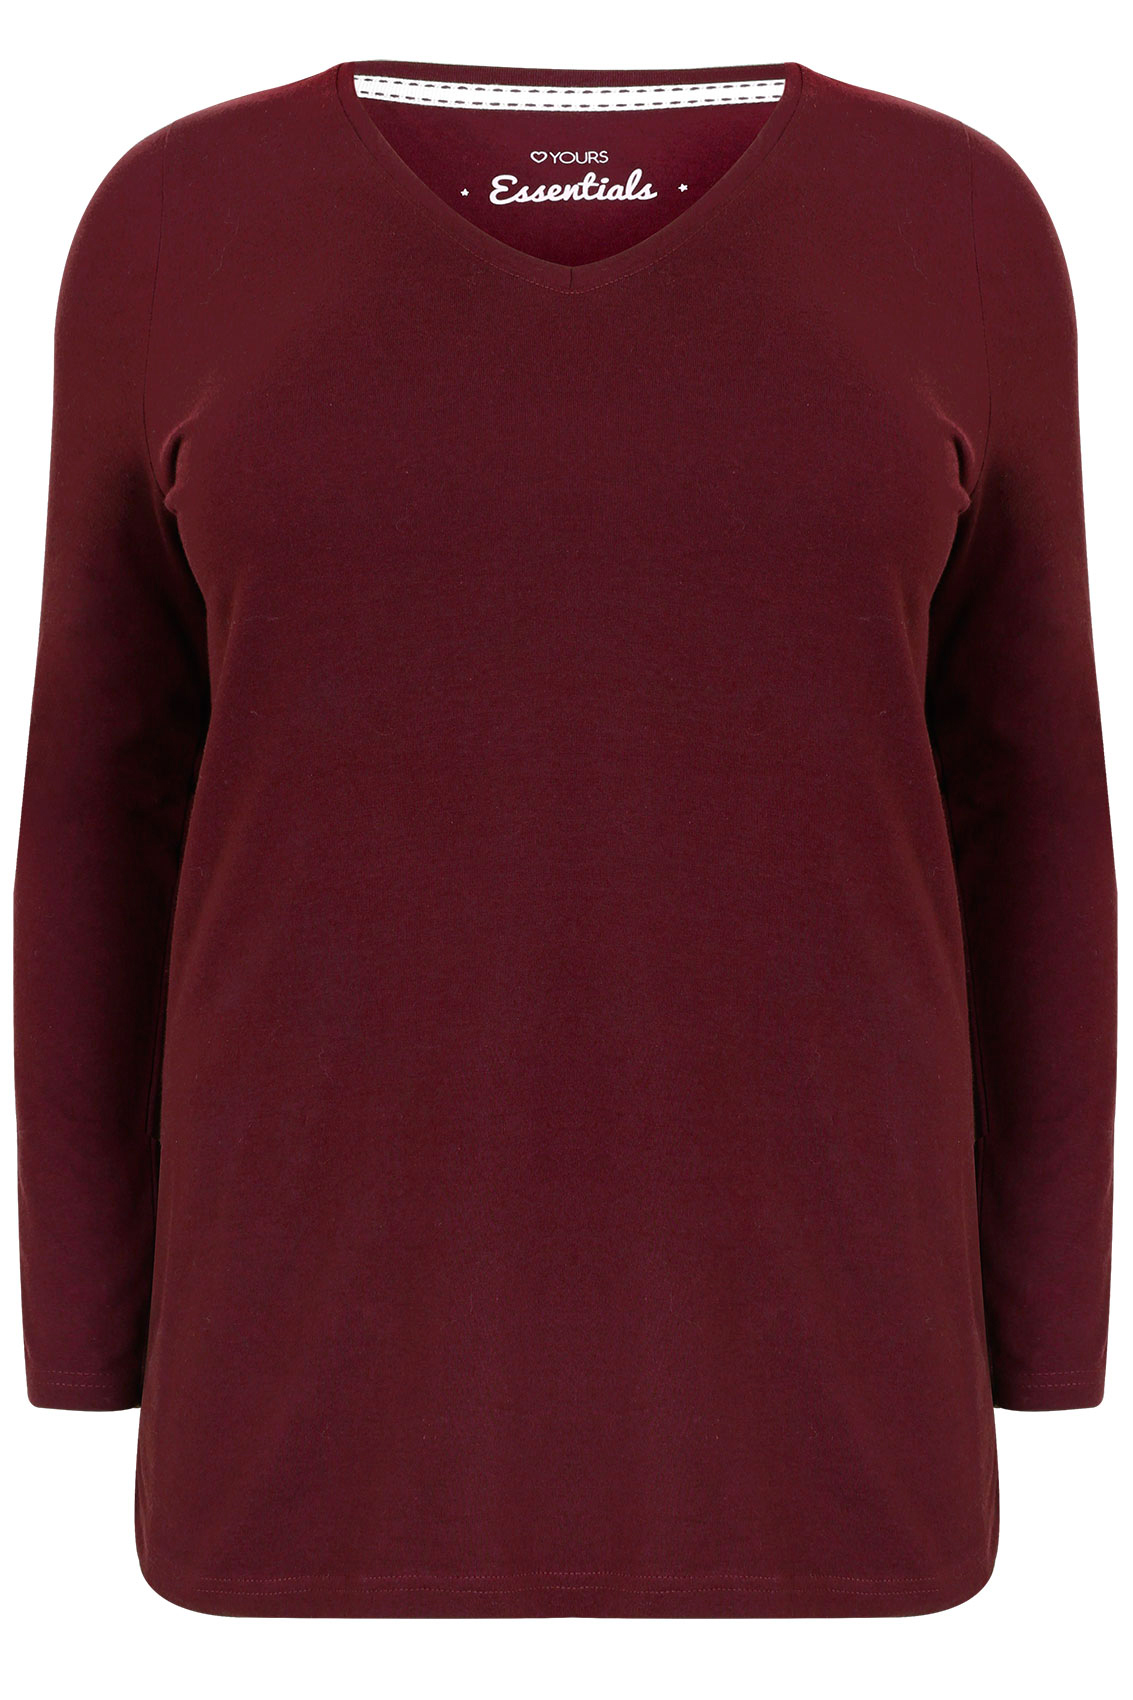 Burgundy Long Sleeve V-Neck Plain T-Shirt, Plus 16,18,20,22,24,26,28,30